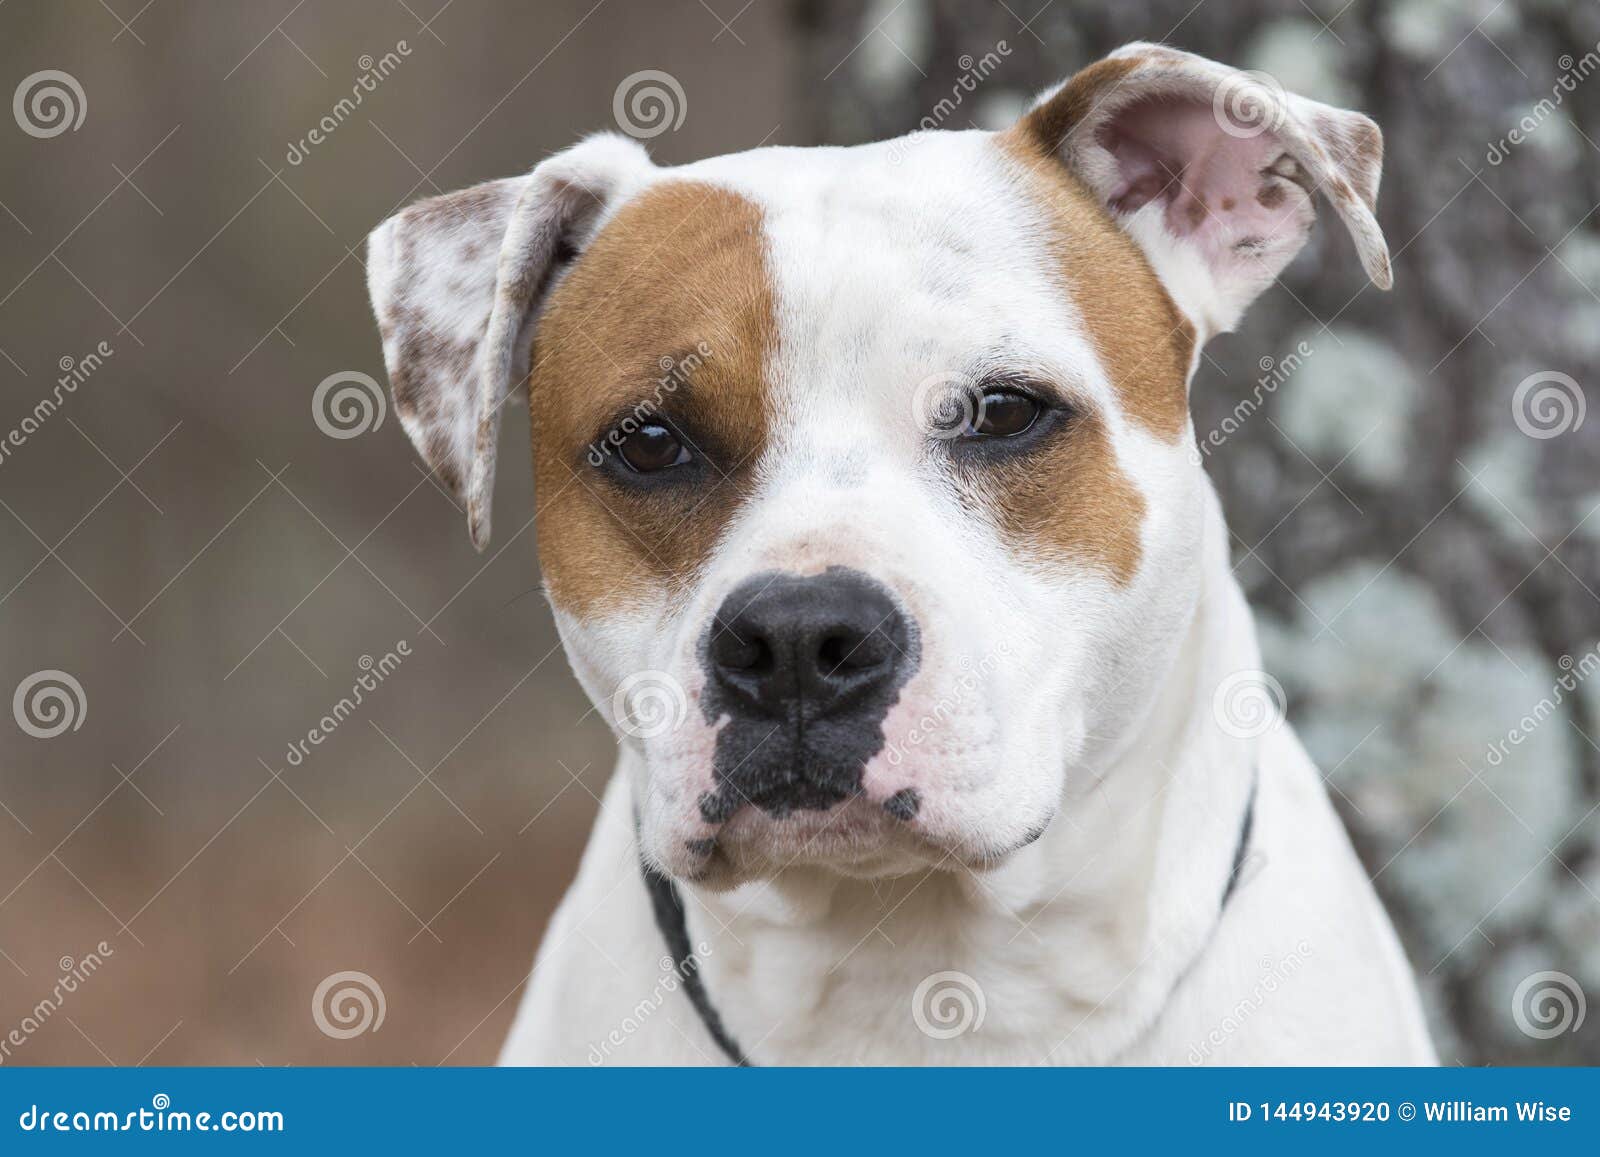 Boxer American Bulldog Mix Breed Dog Stock Photo Image Of Bulldog Humane 144943920